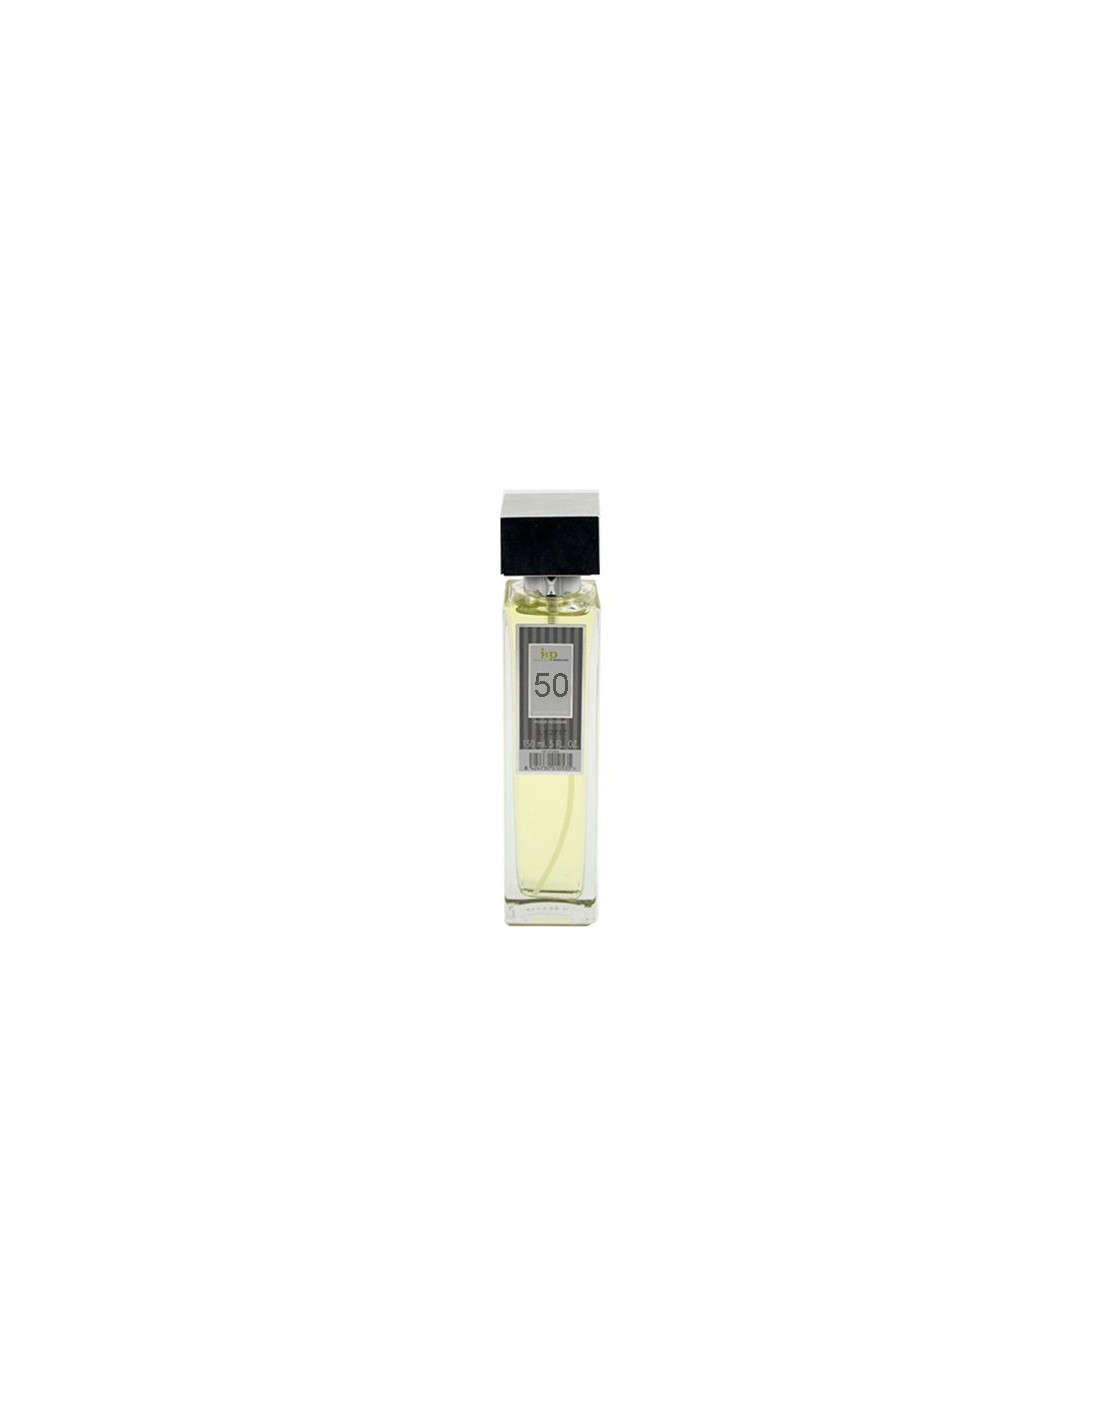 IAP Perfume Hombre N50 150ml